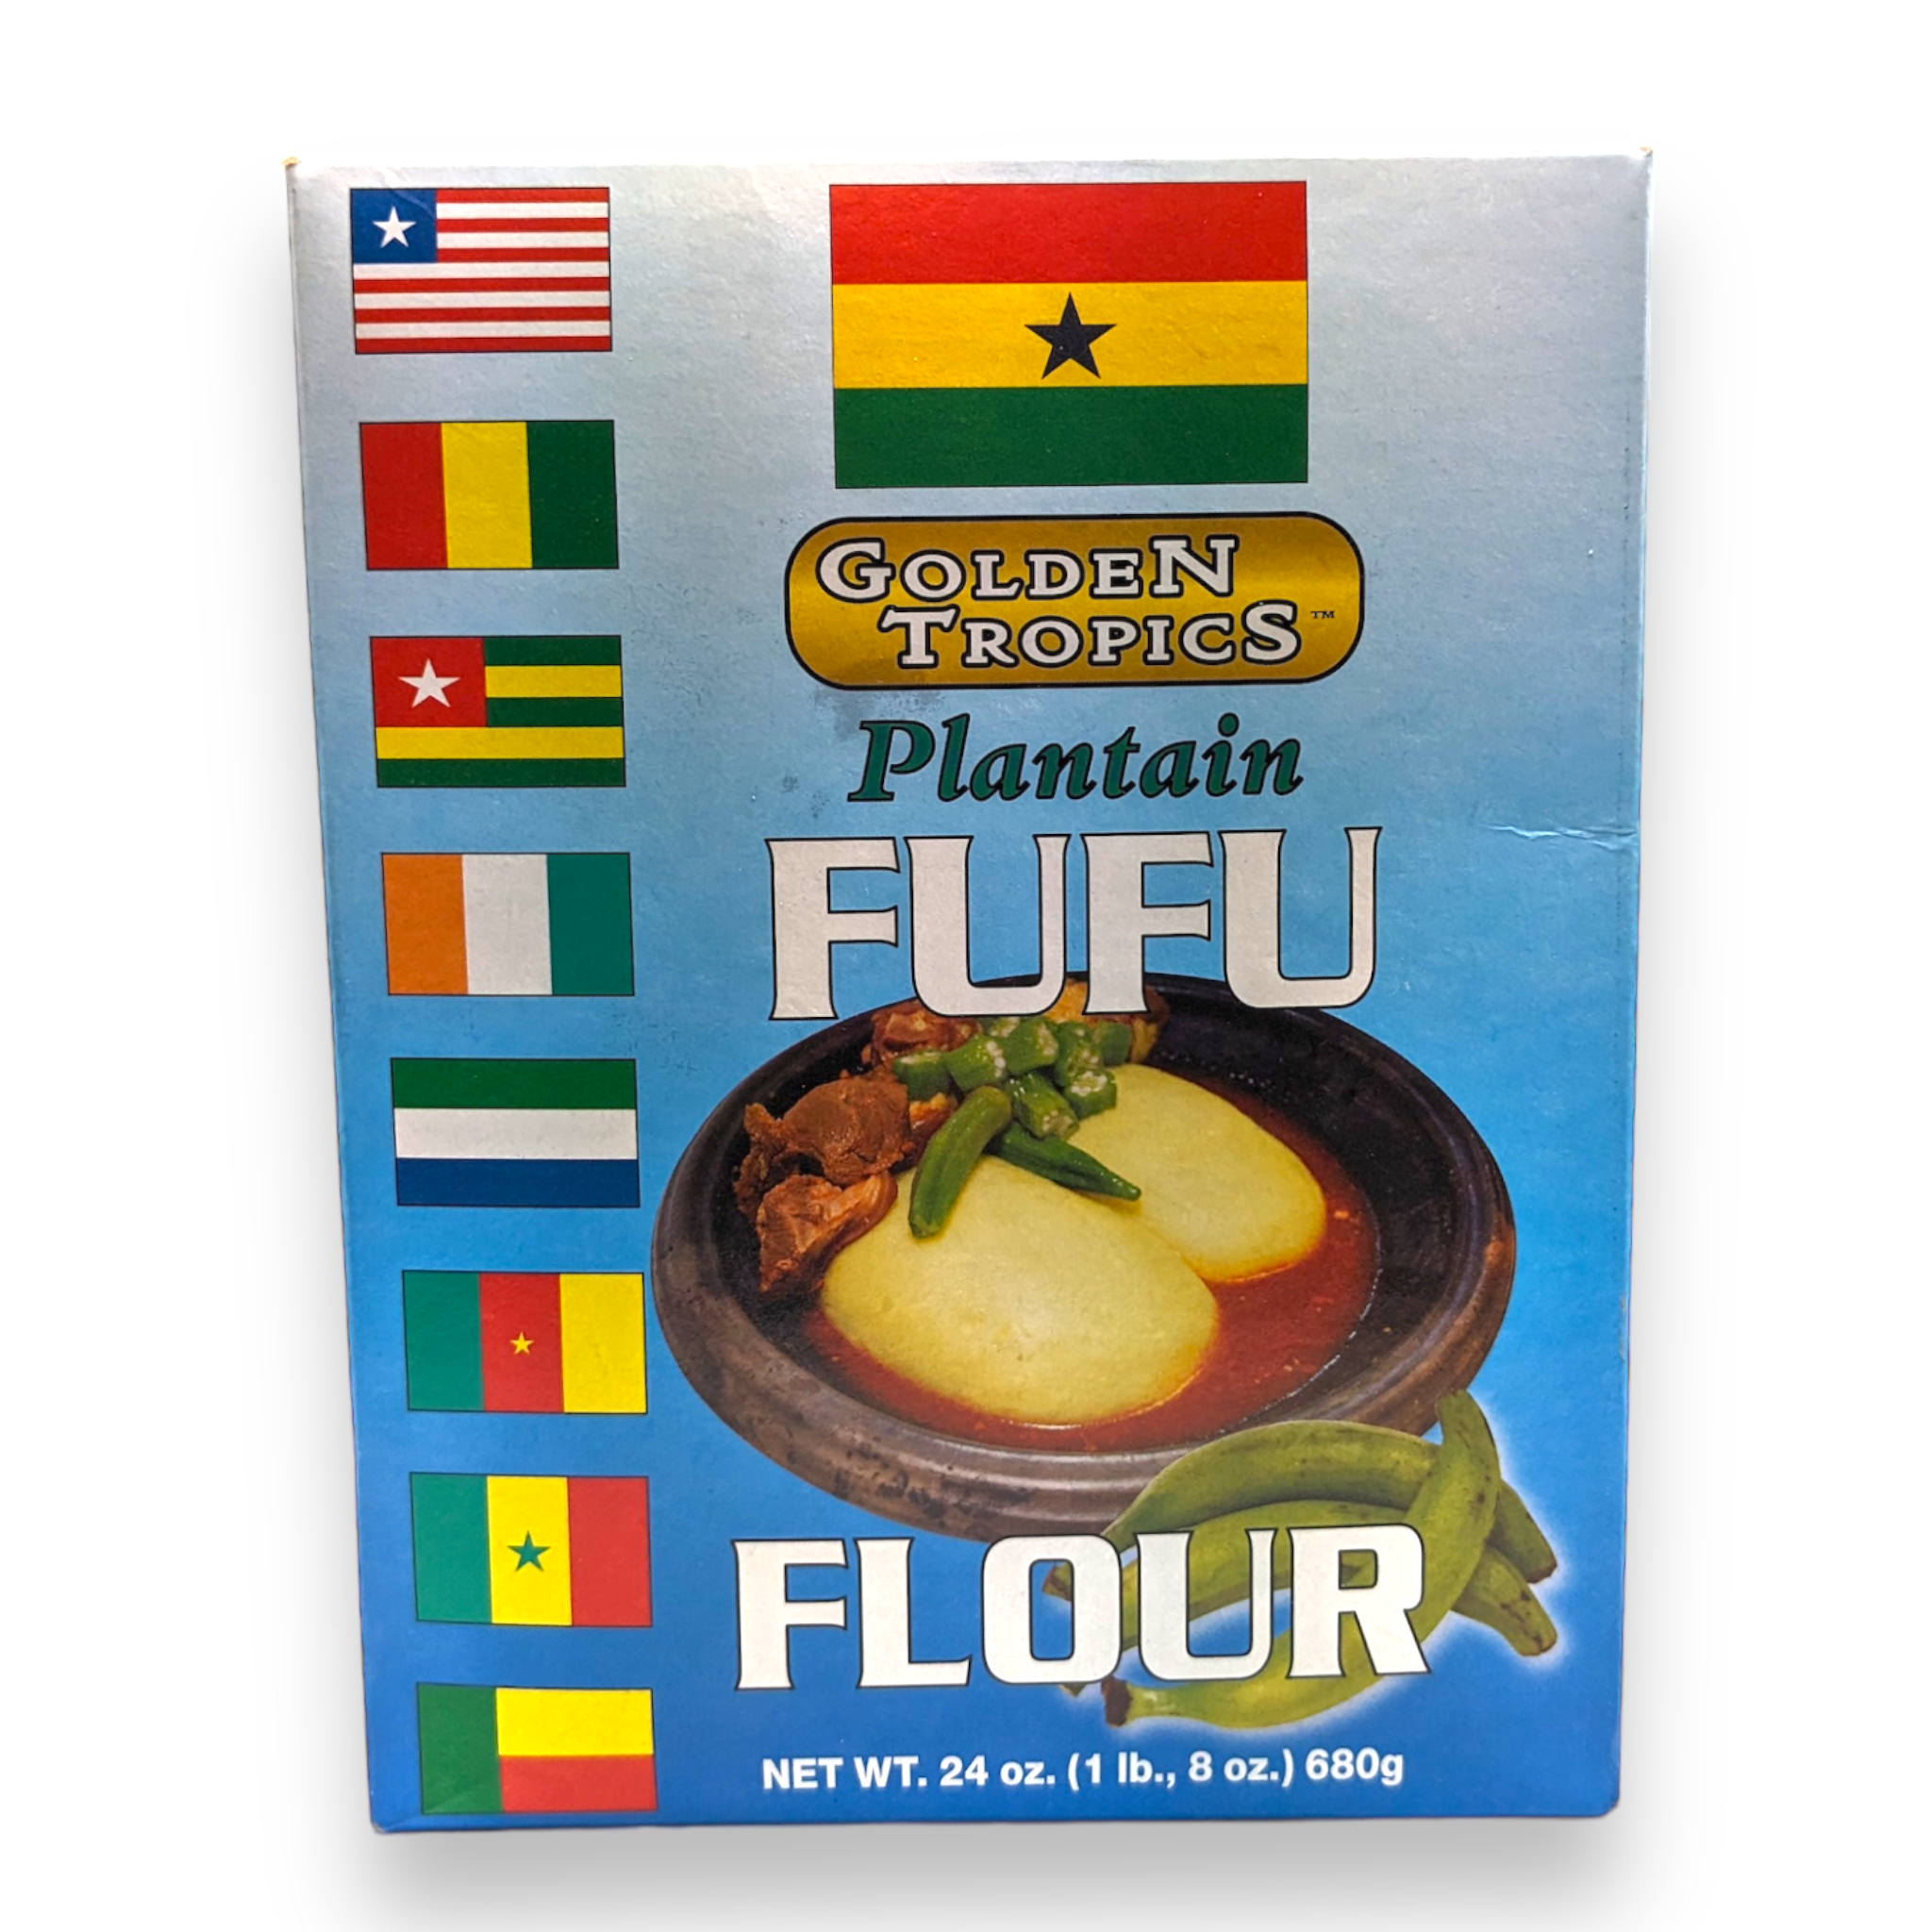 Farine de Fufu Banane Plantain - Golden Tropics